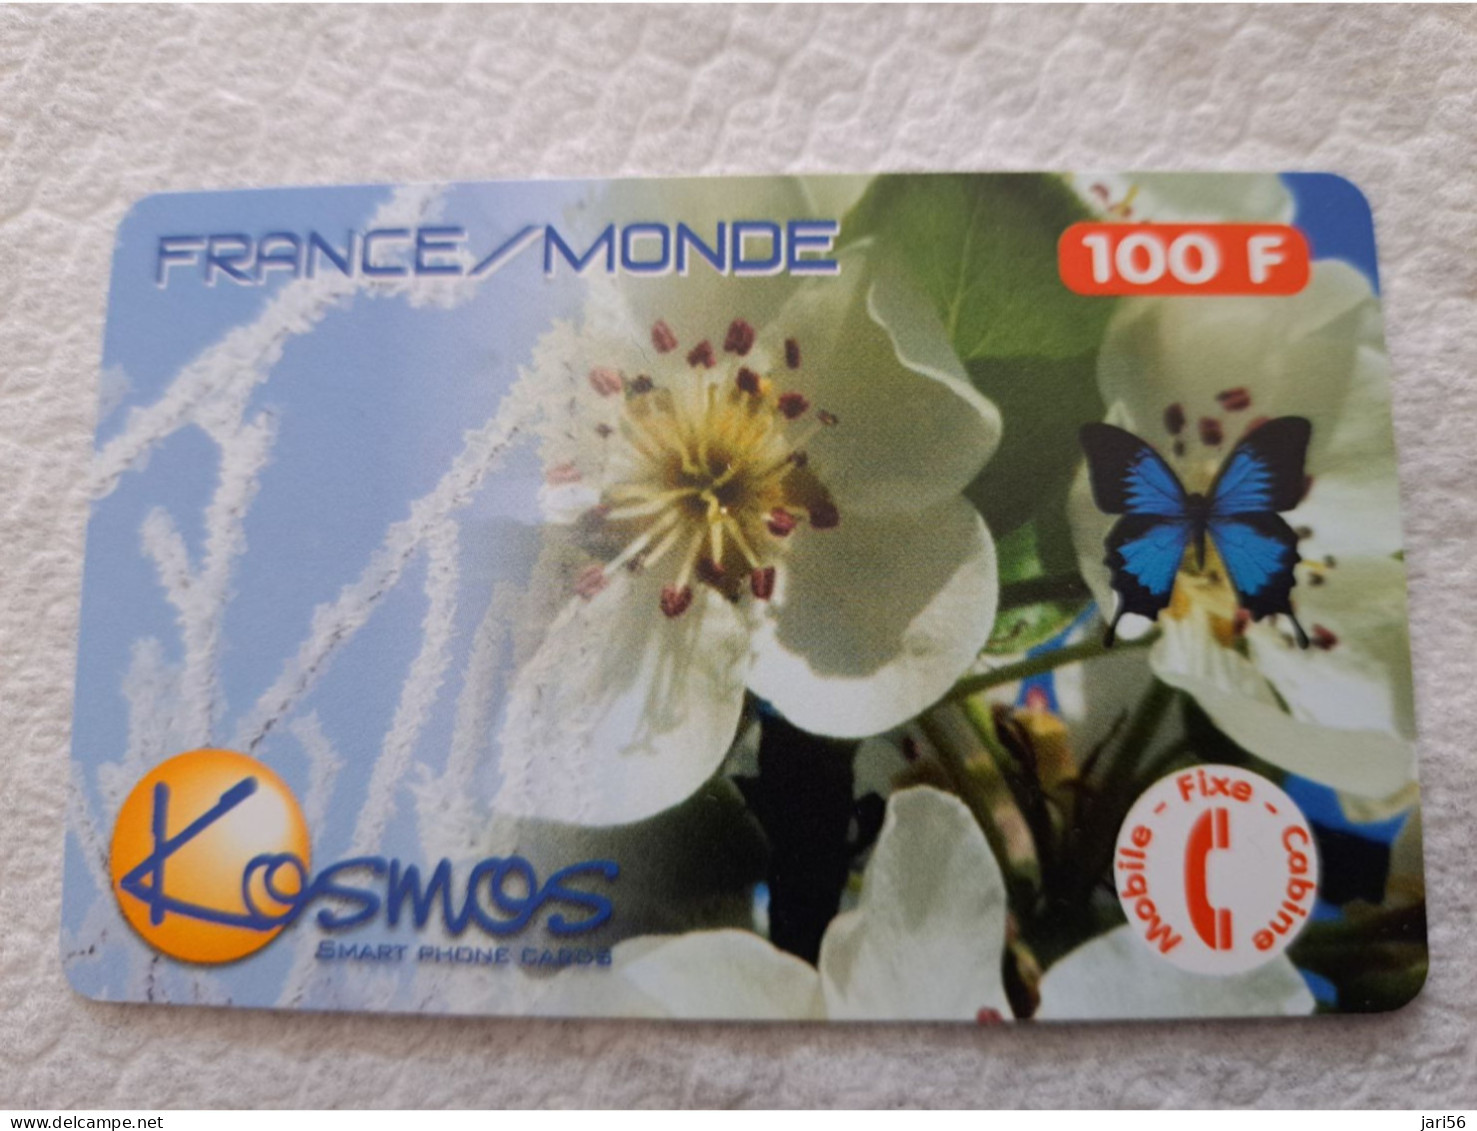 FRANCE/FRANKRIJK  100F// KOSMOS SMART/ FRANCE MONDE  /BUTTERFLY /FLOWER /   PREPAID  / USED   ** 14546** - Per Cellulari (telefonini/schede SIM)